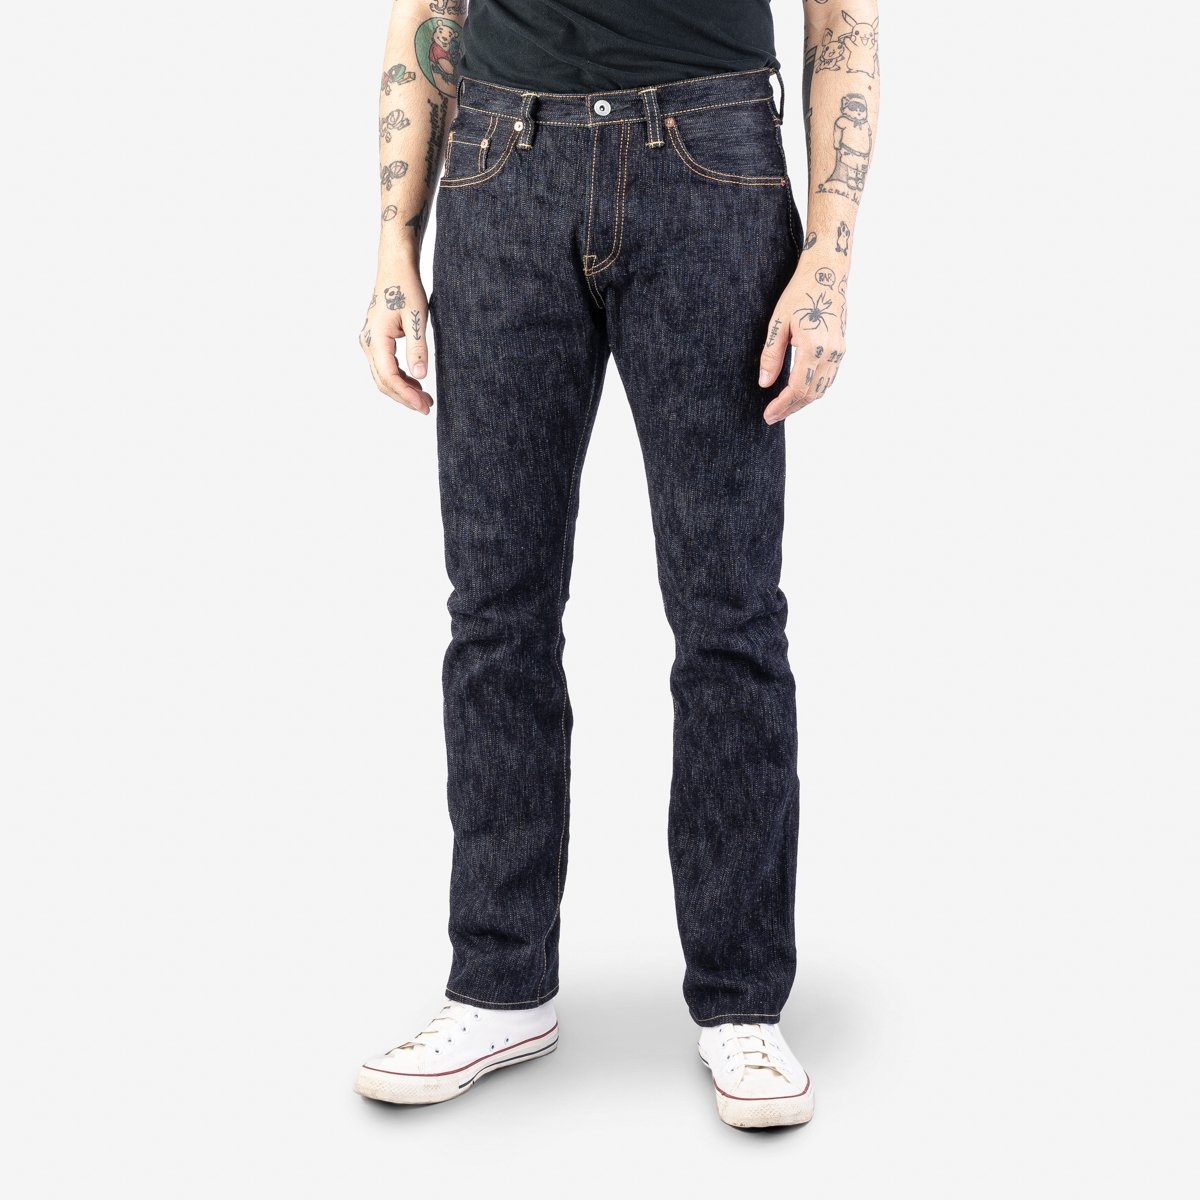 IH-555S-SLB 16oz Slubby Selvedge Denim Super Slim Cut Jeans - Indigo - 2